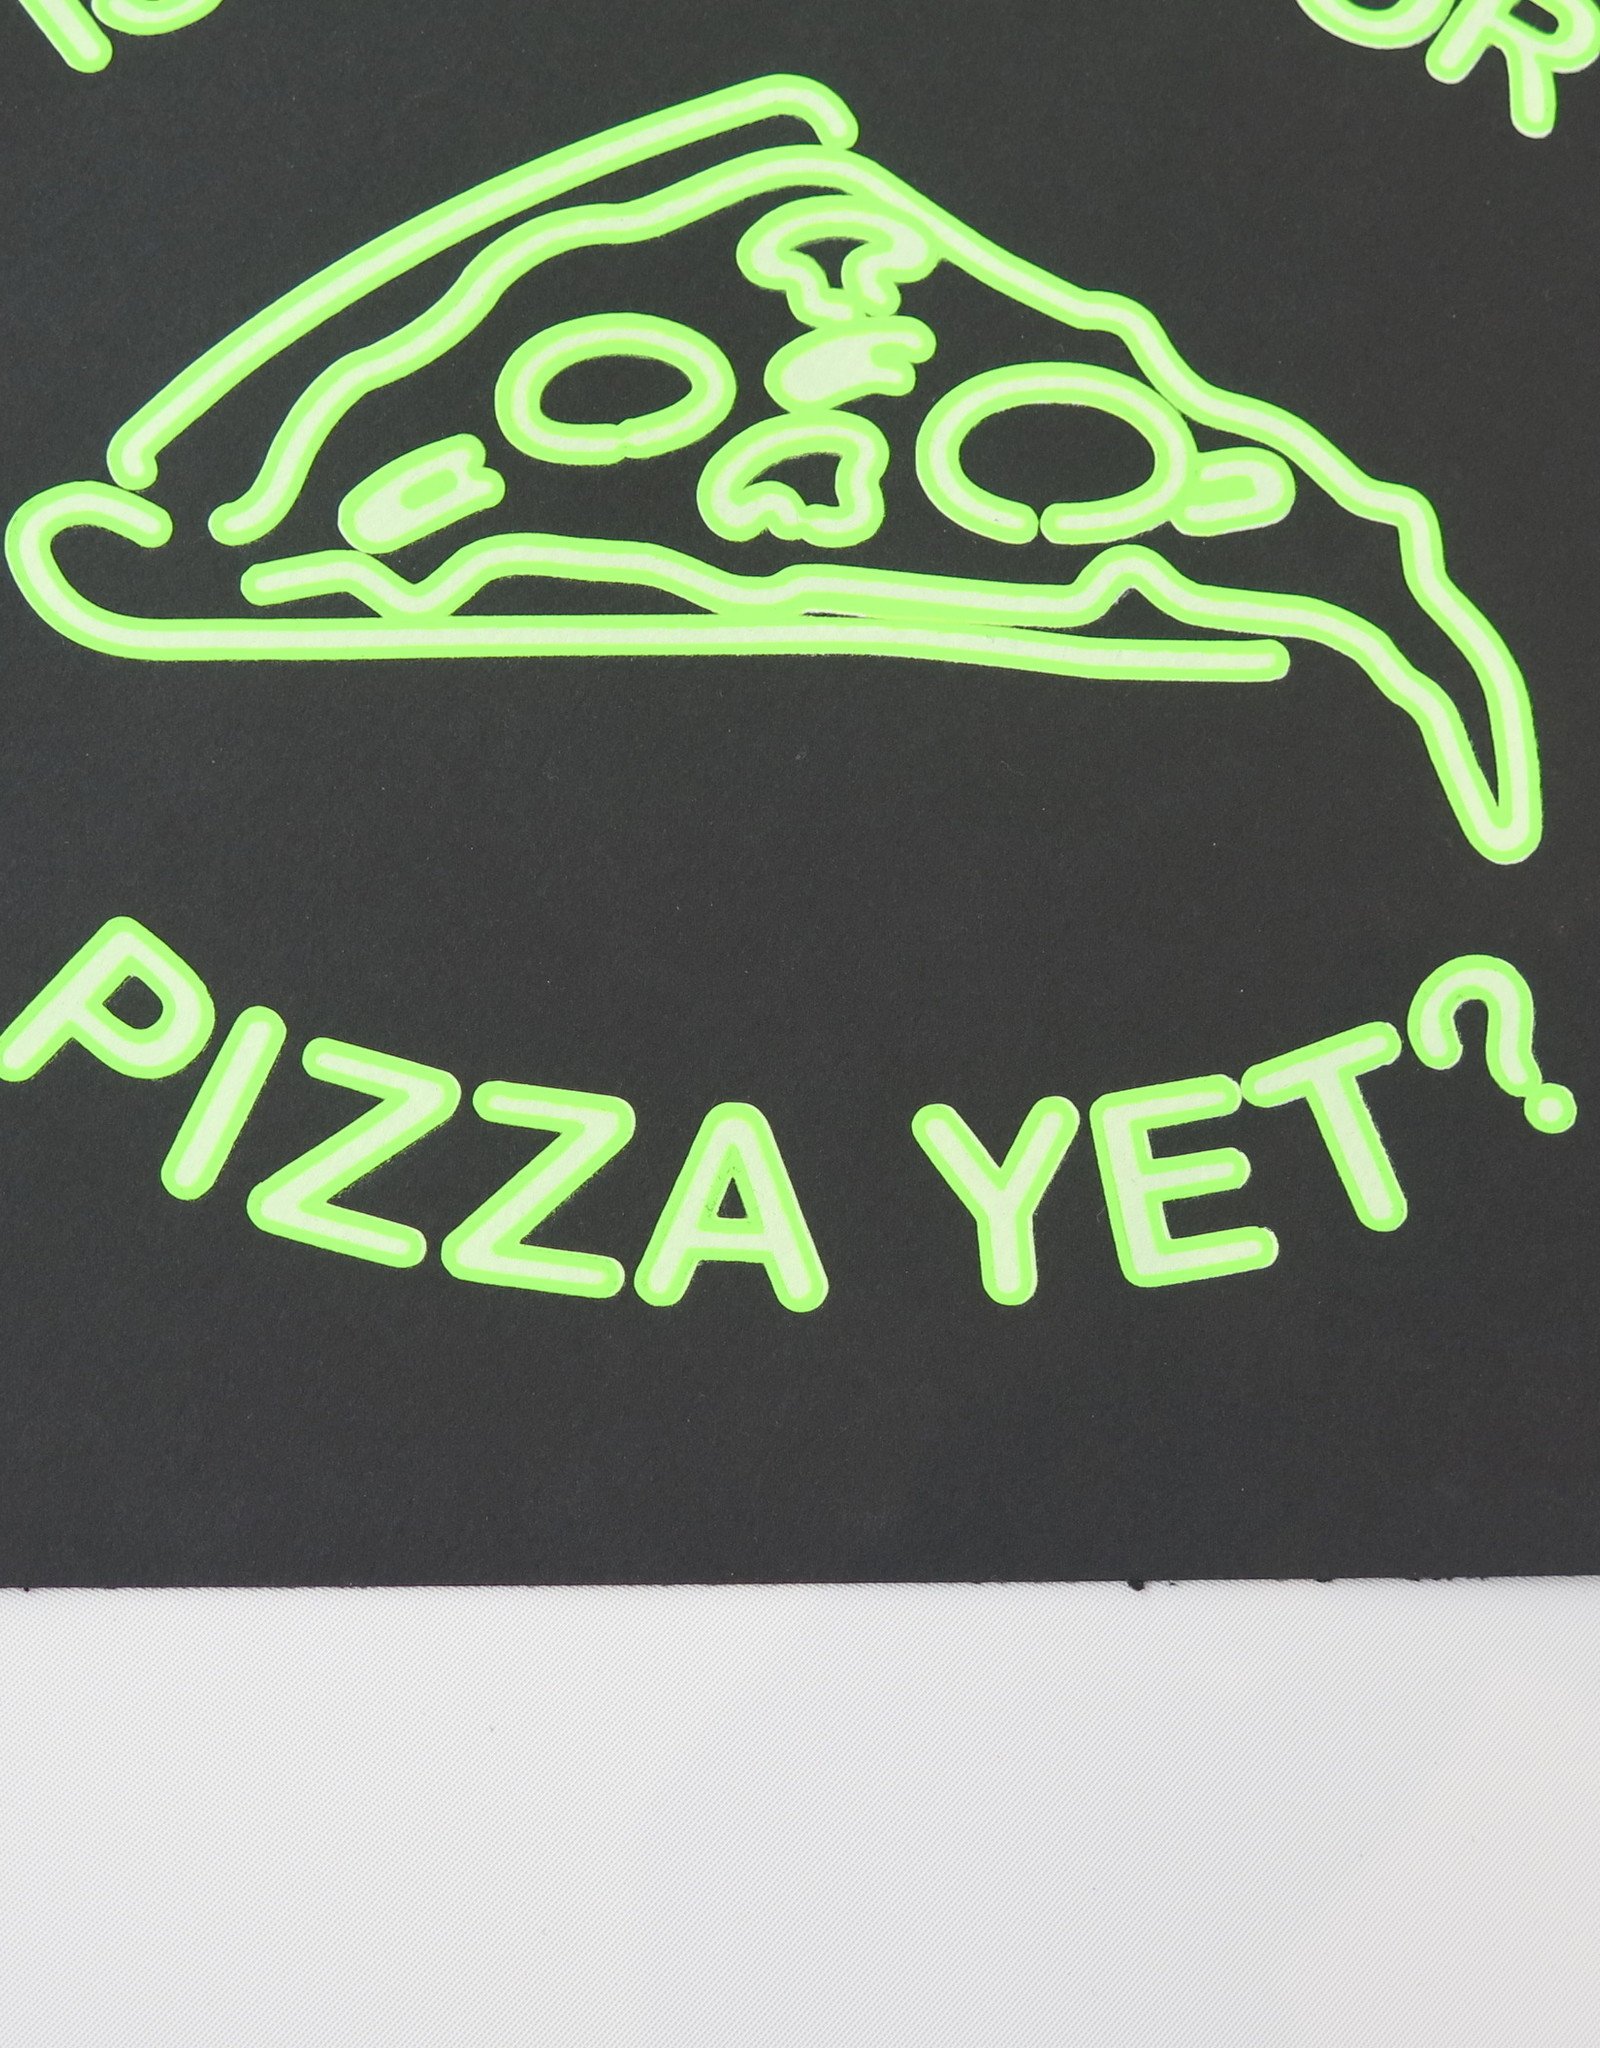 Danielle Przybysz “Is It Time For Pizza Yet?” Silk Screen Print by Danielle Przybysz